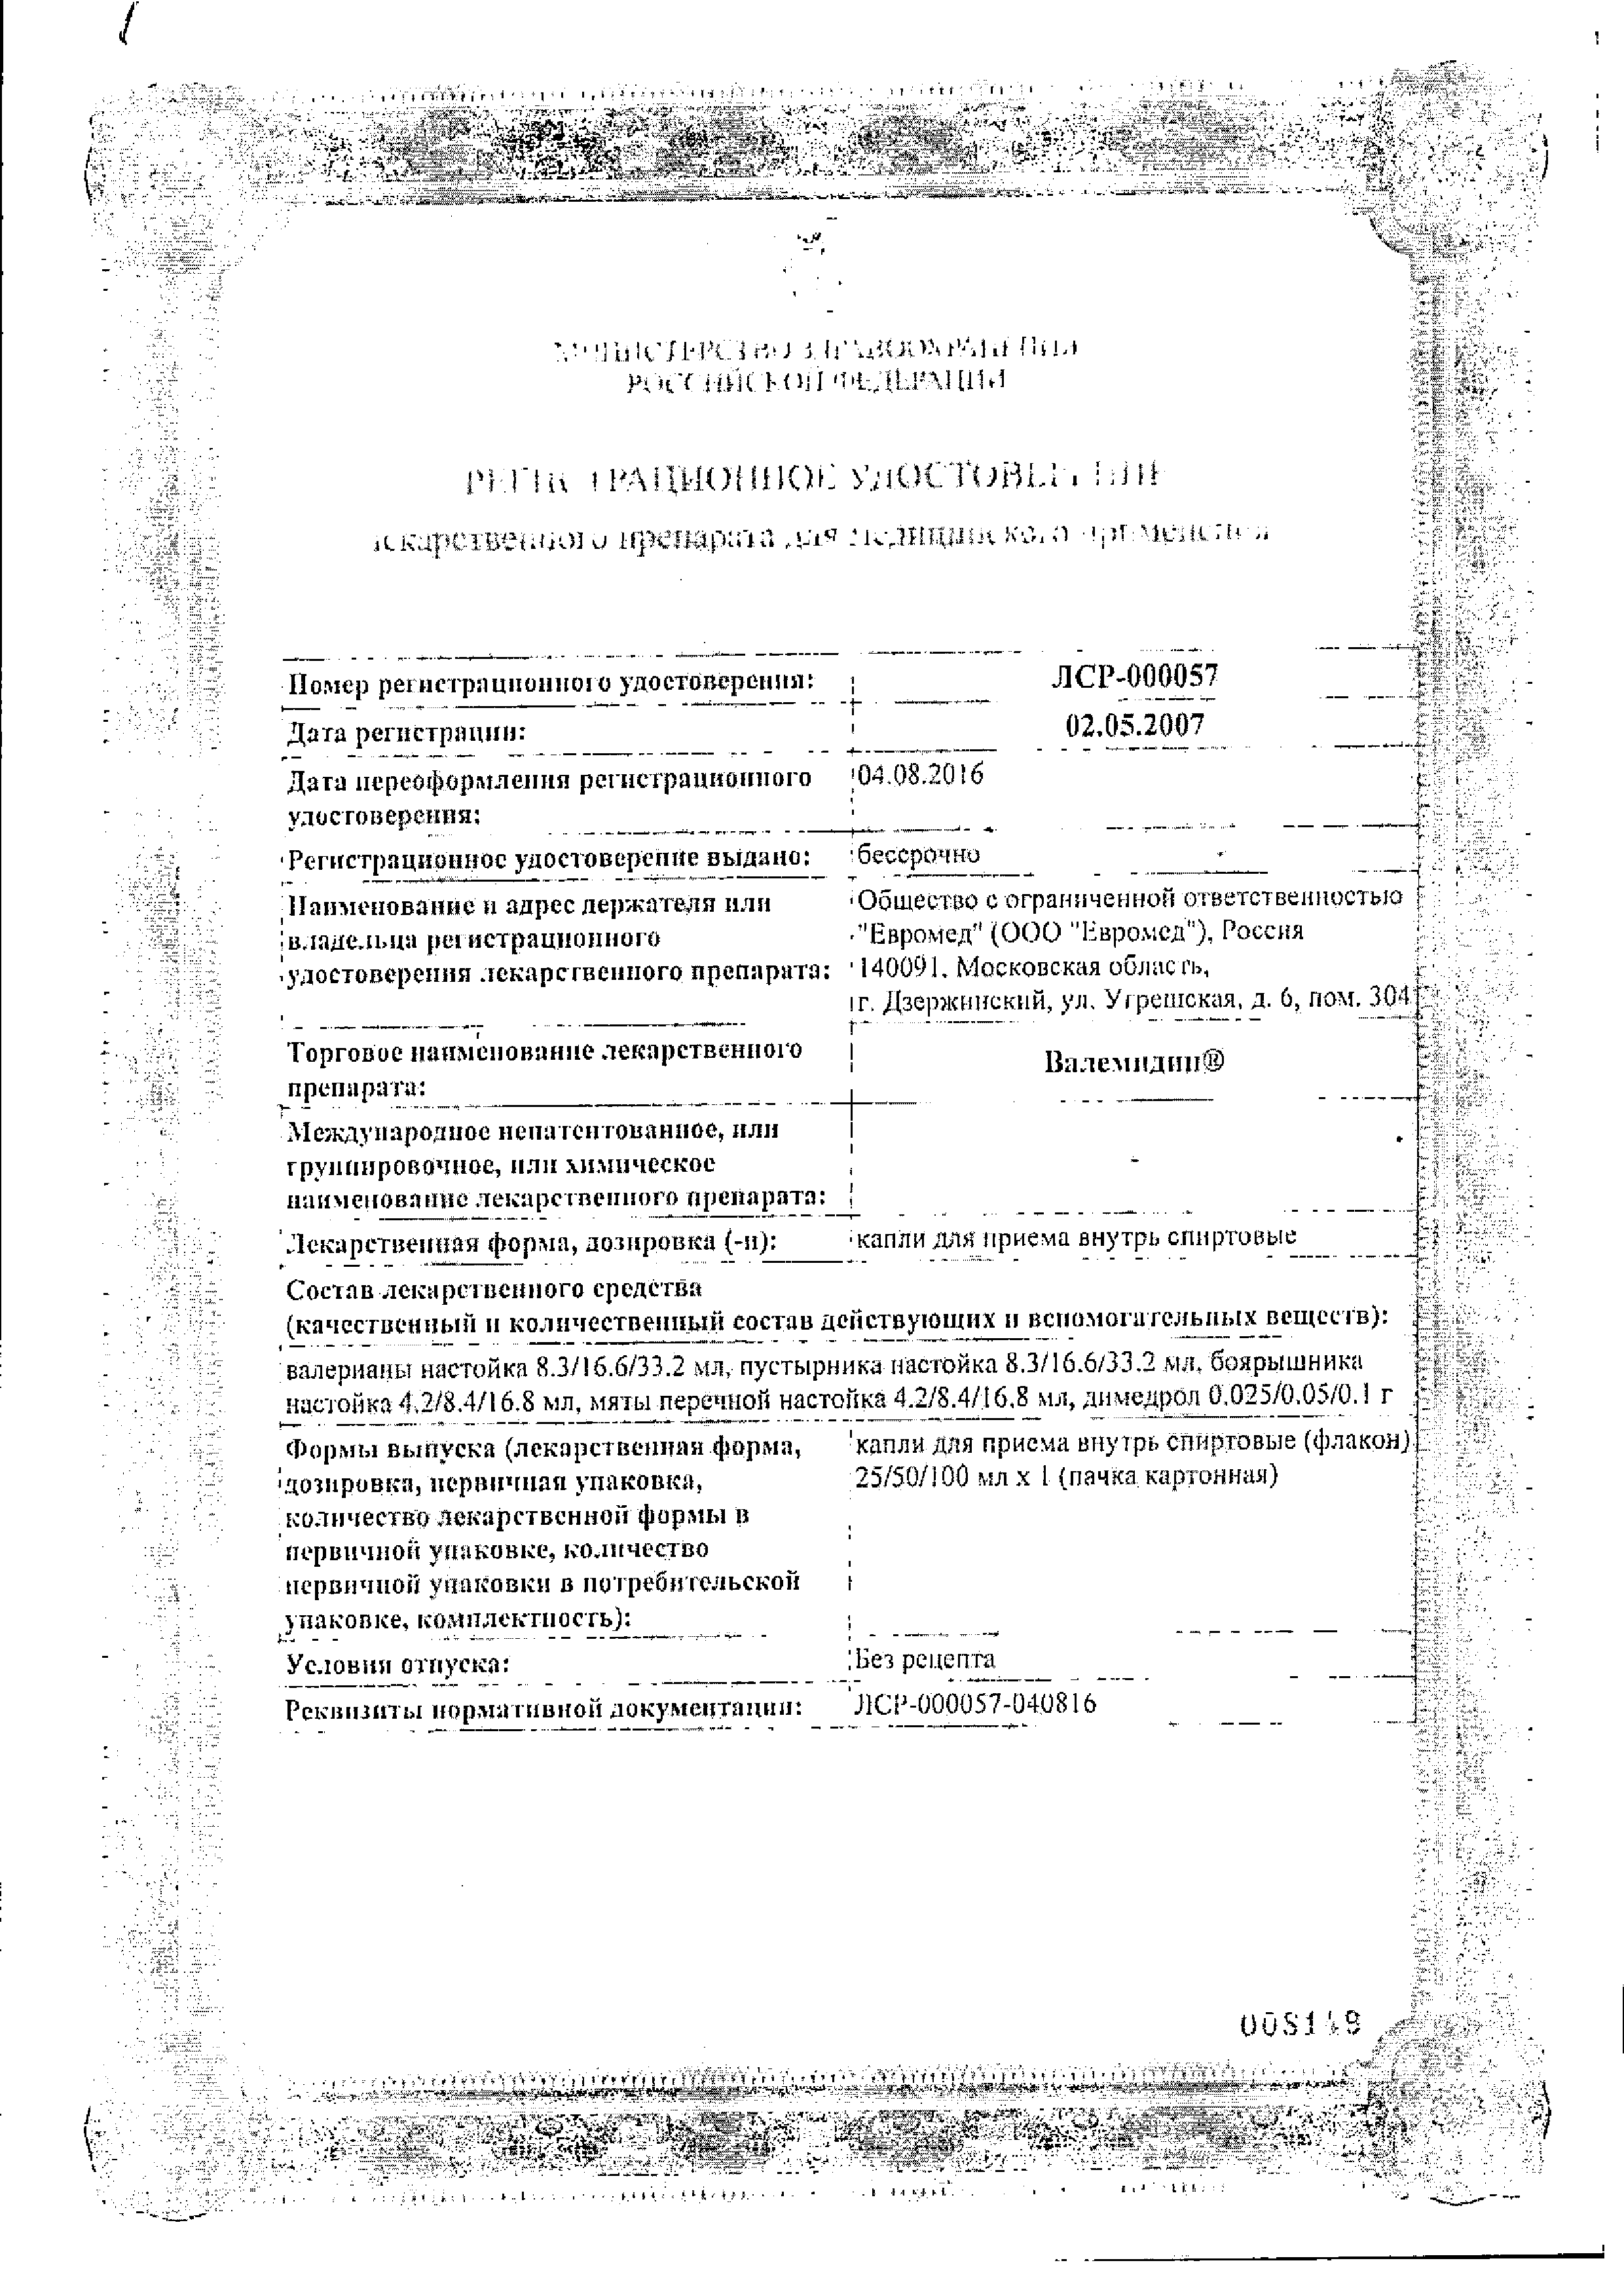 Валемидин сертификат